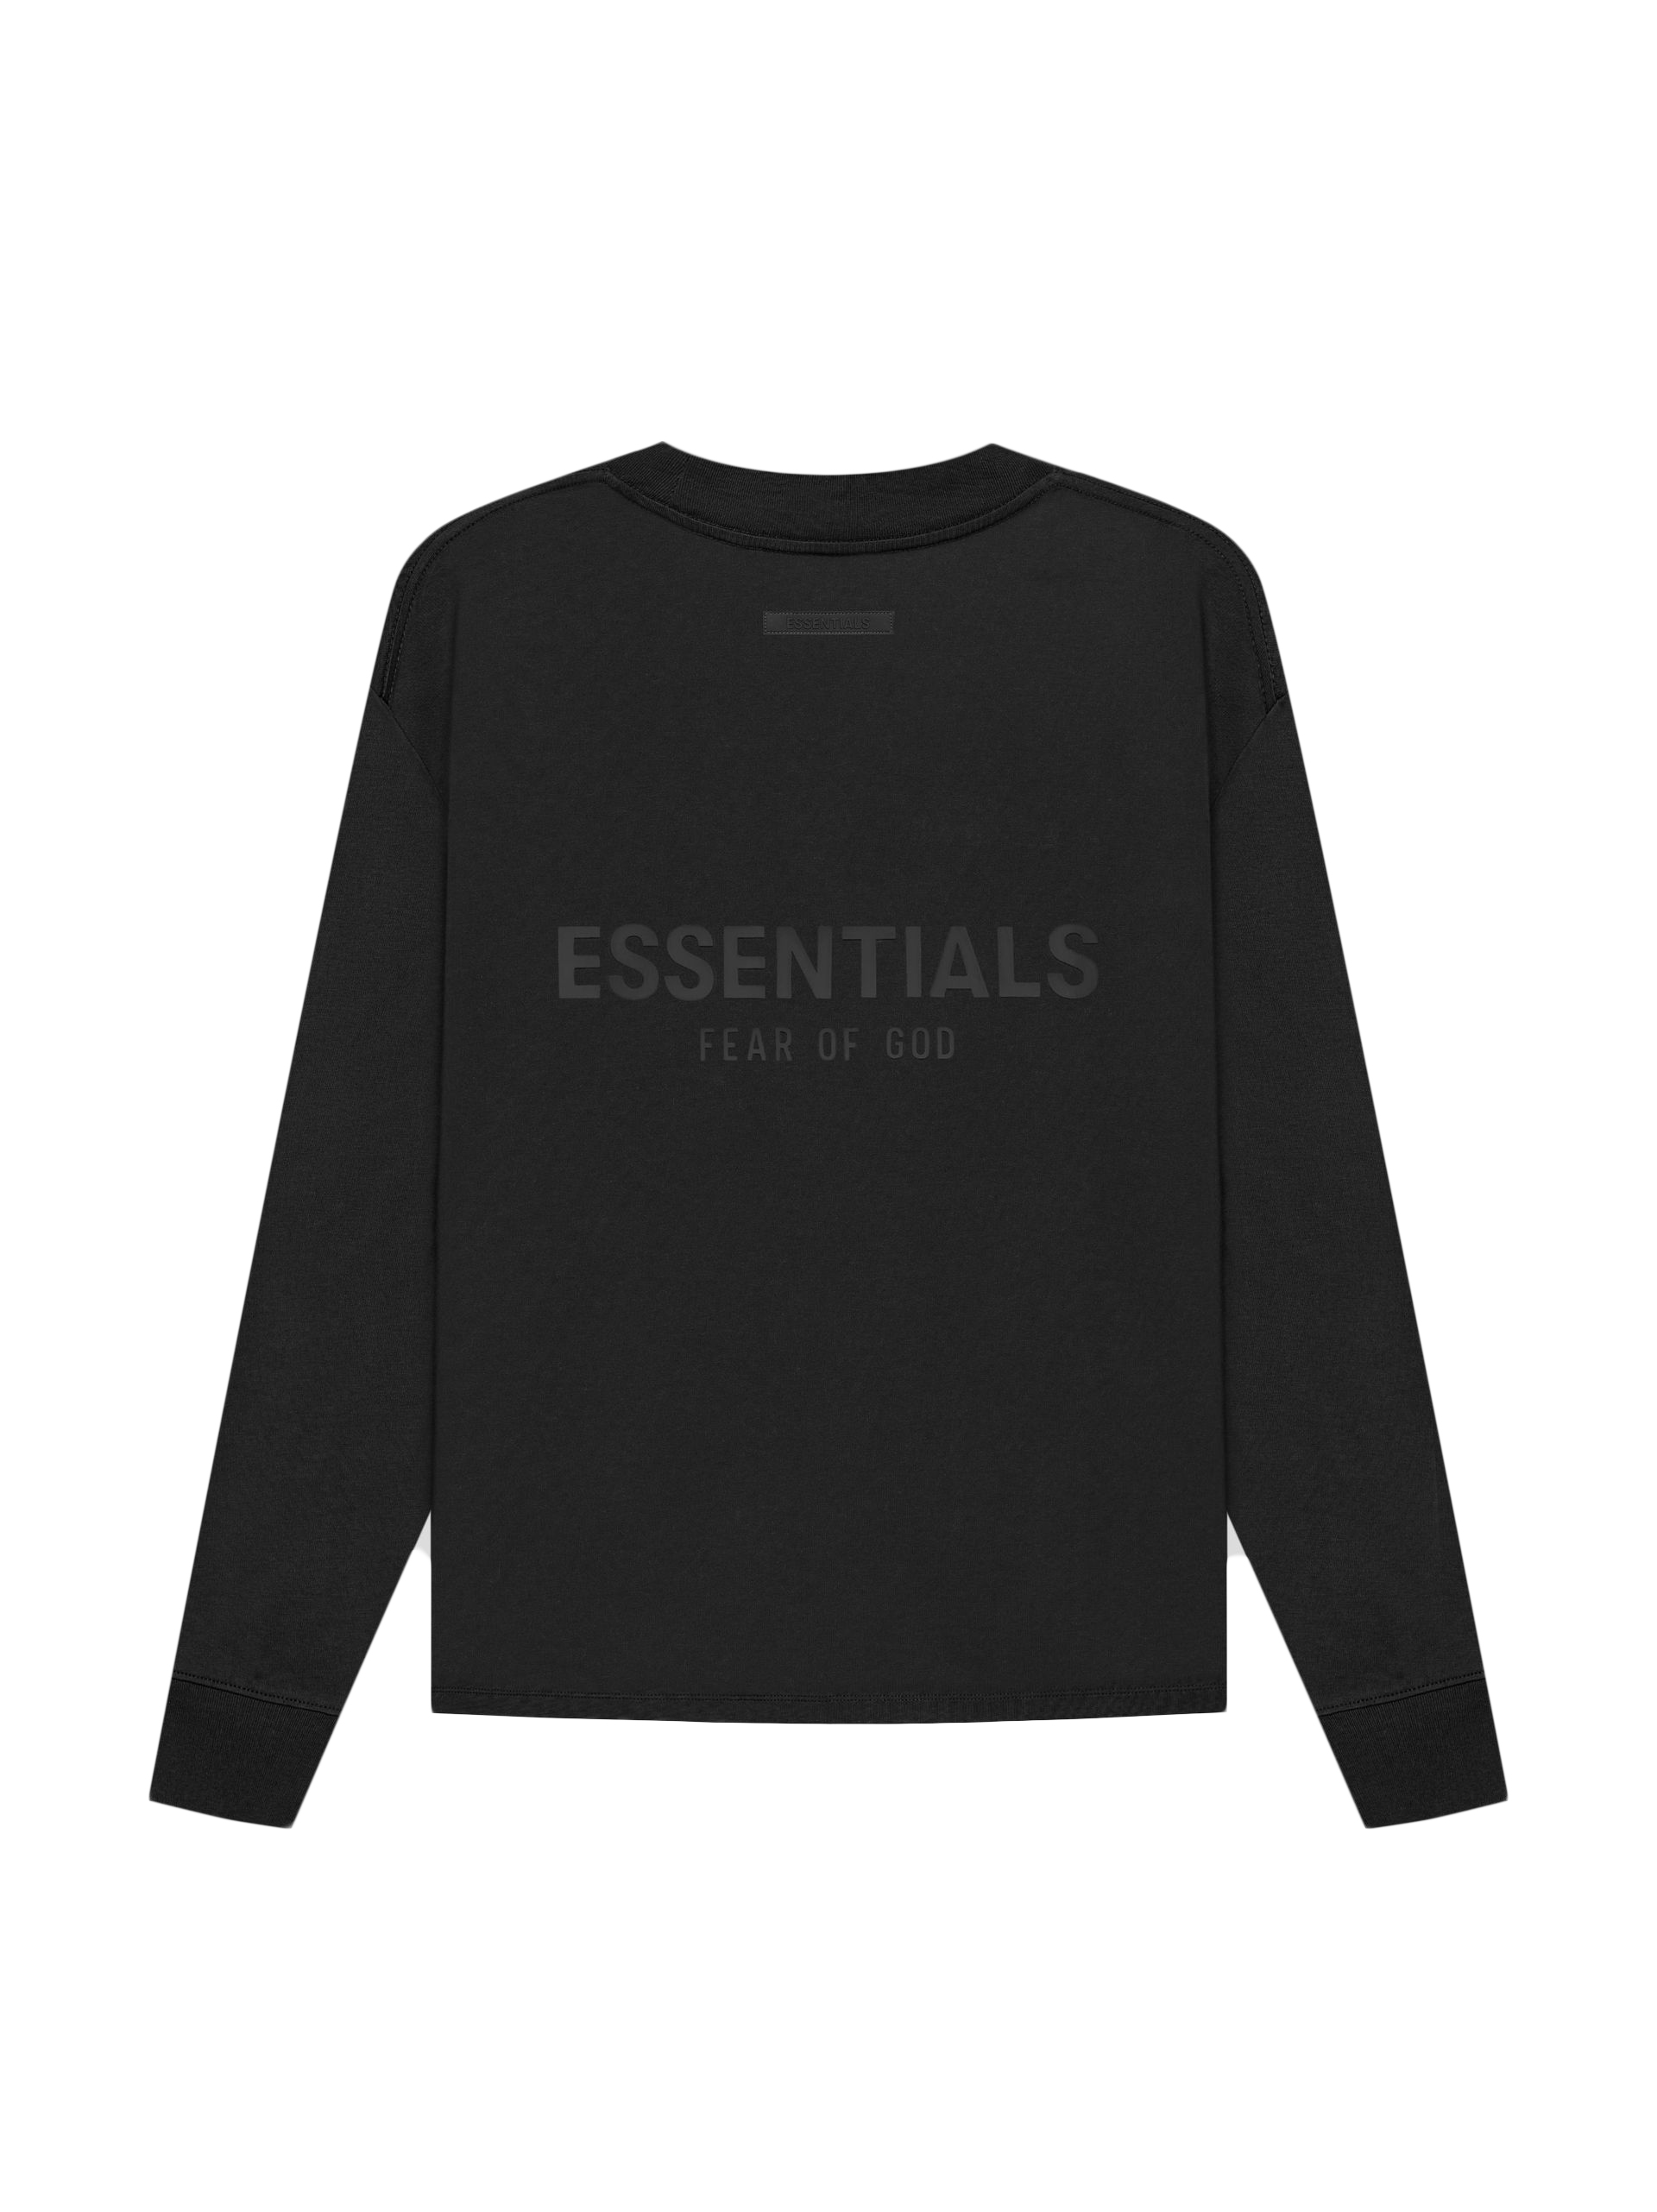 Nike x Peaceminusone G-Dragon Long Sleeve T-shirt Black - SS23 